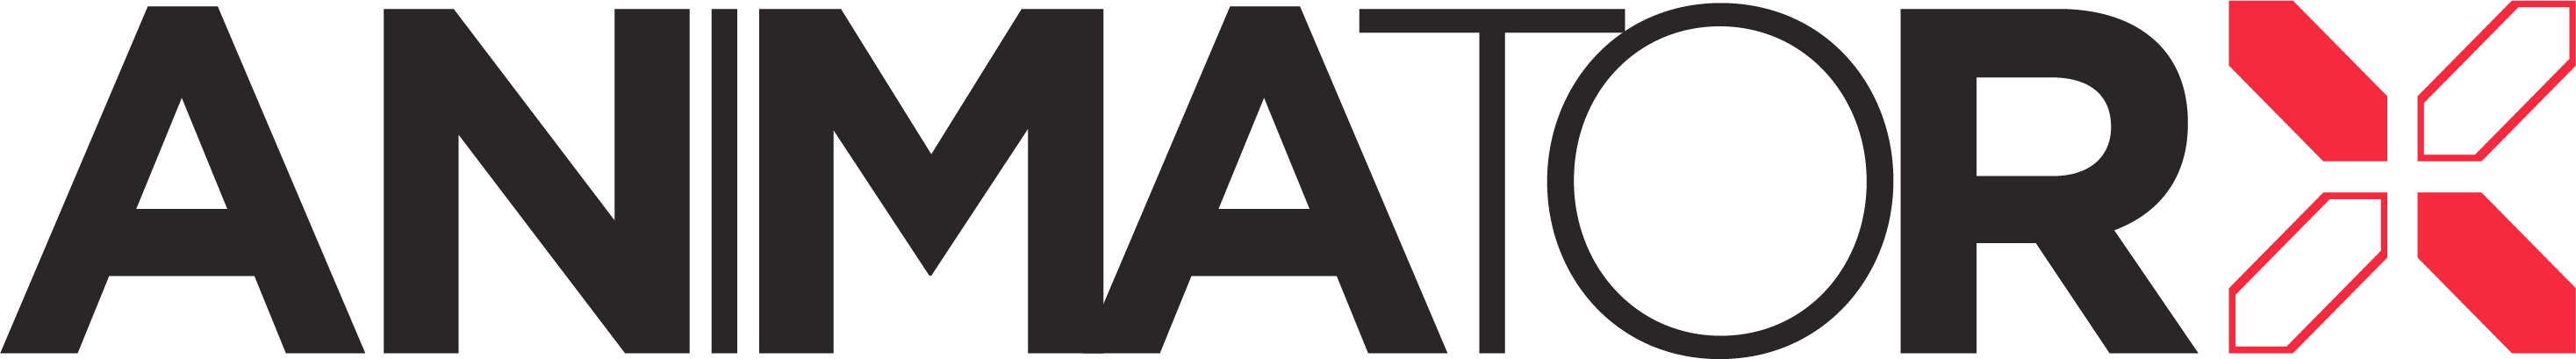 animator-x logo